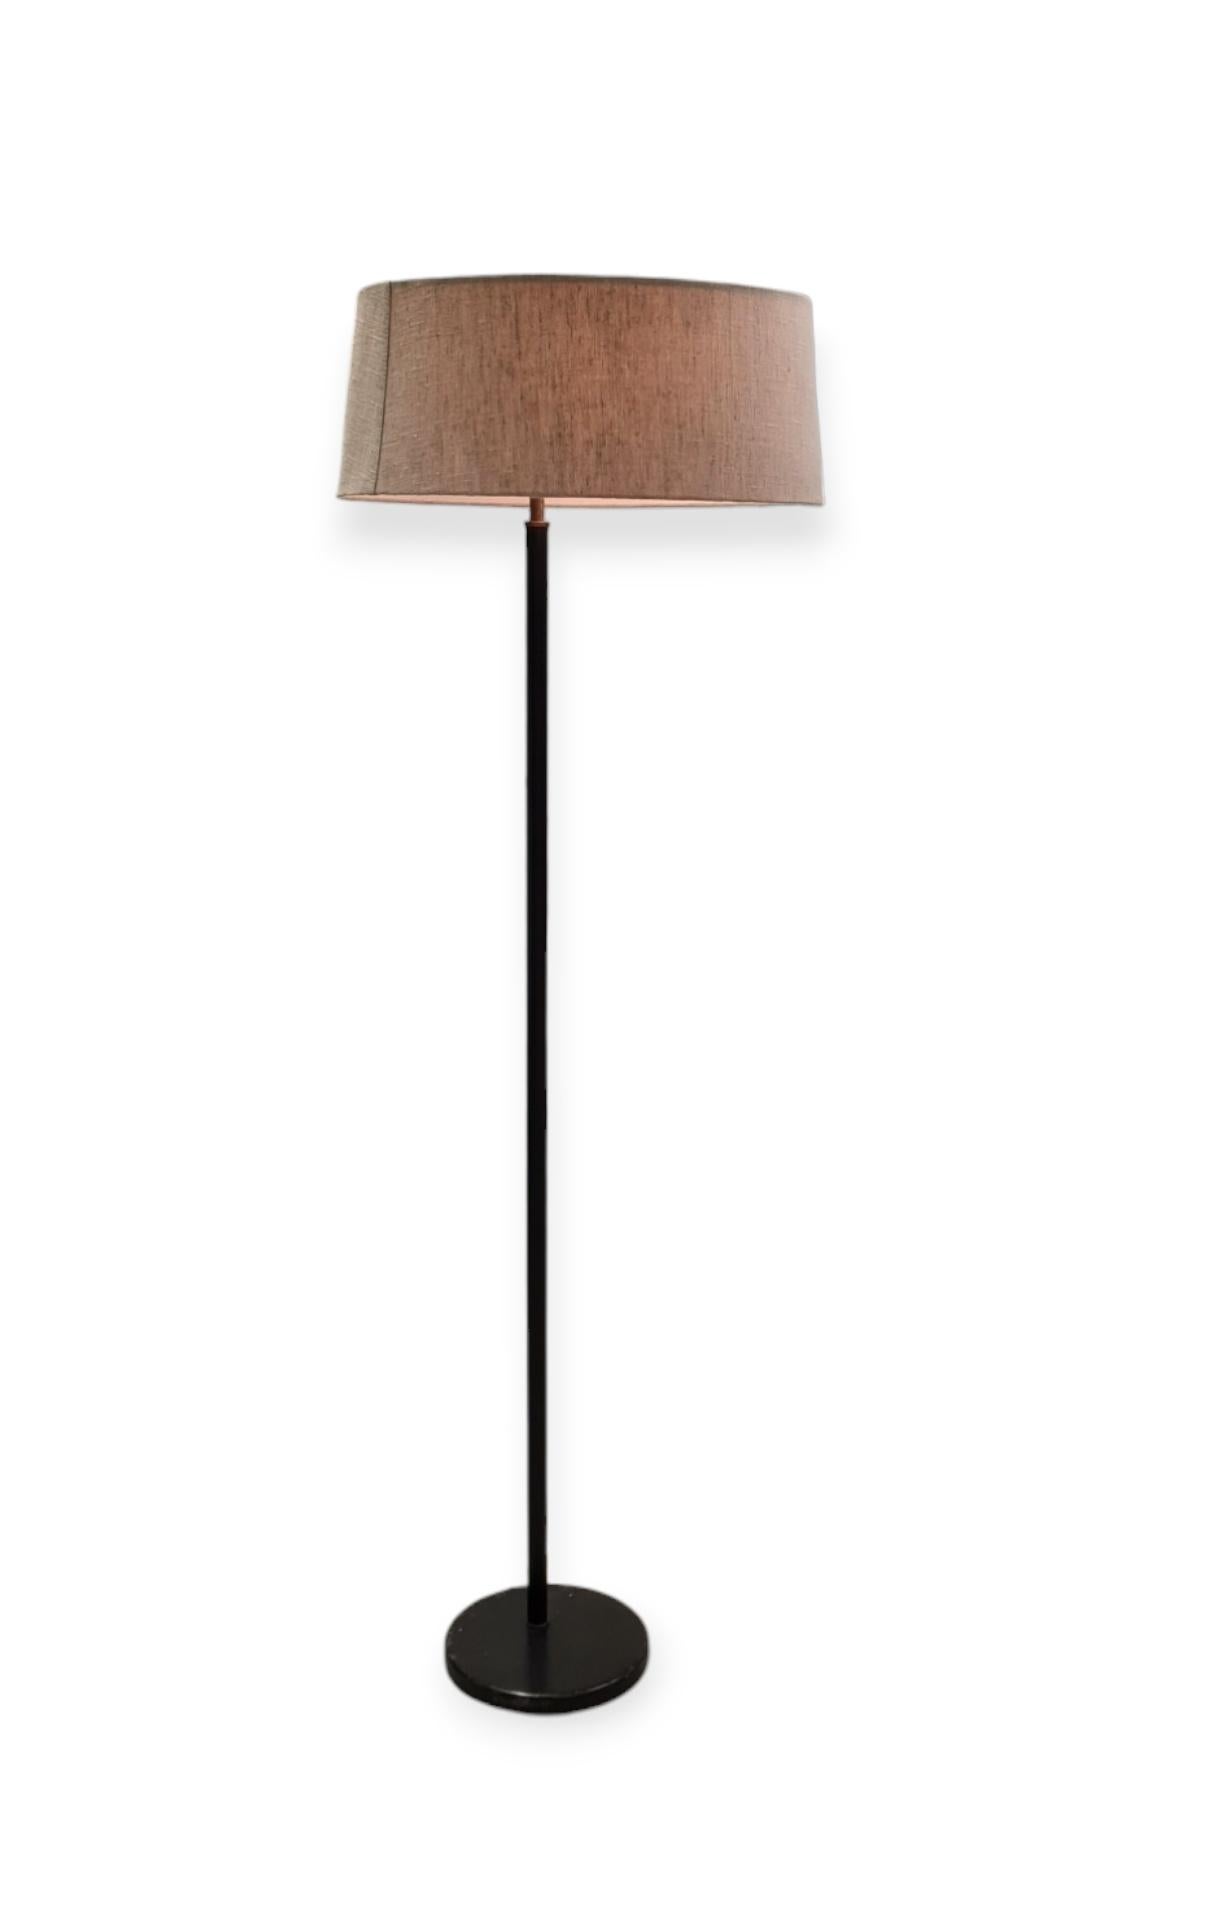 Scandinavian Modern Maija Heikinheimo Floor Lamp MH801, Valaistustyö for Artek 1950s For Sale